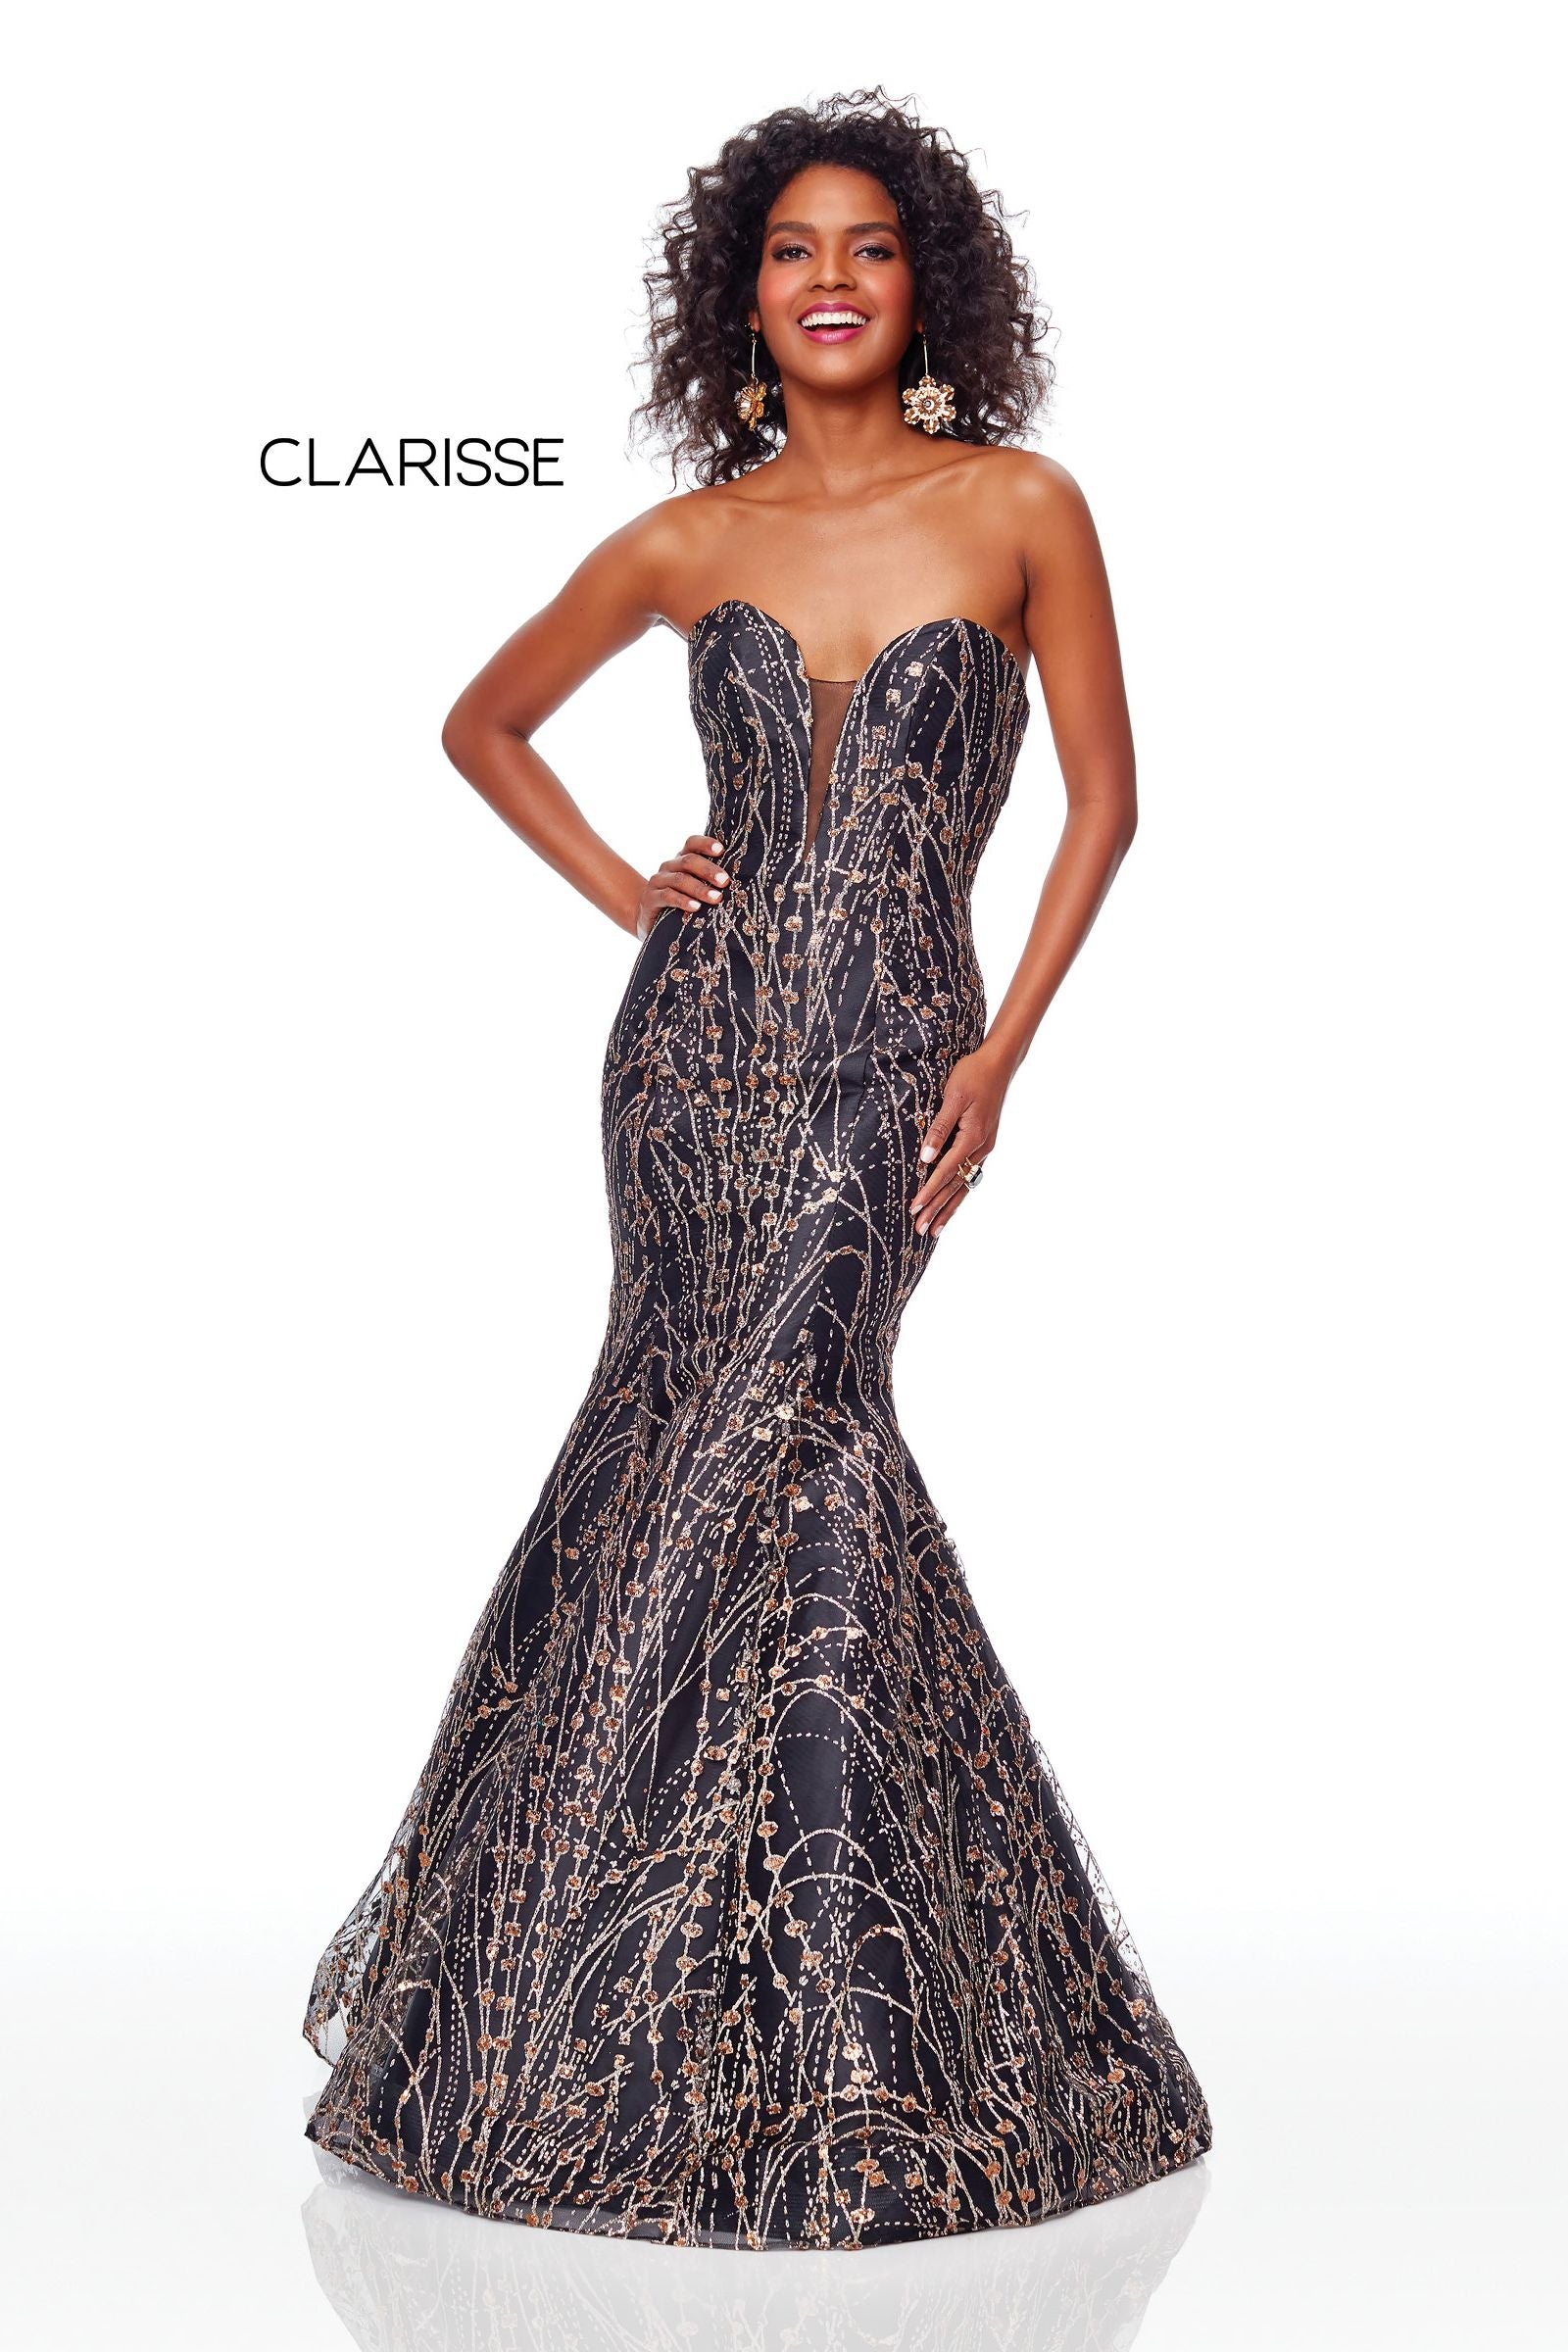 Clarisse -3719 Strapless Mermaid Prom Dress